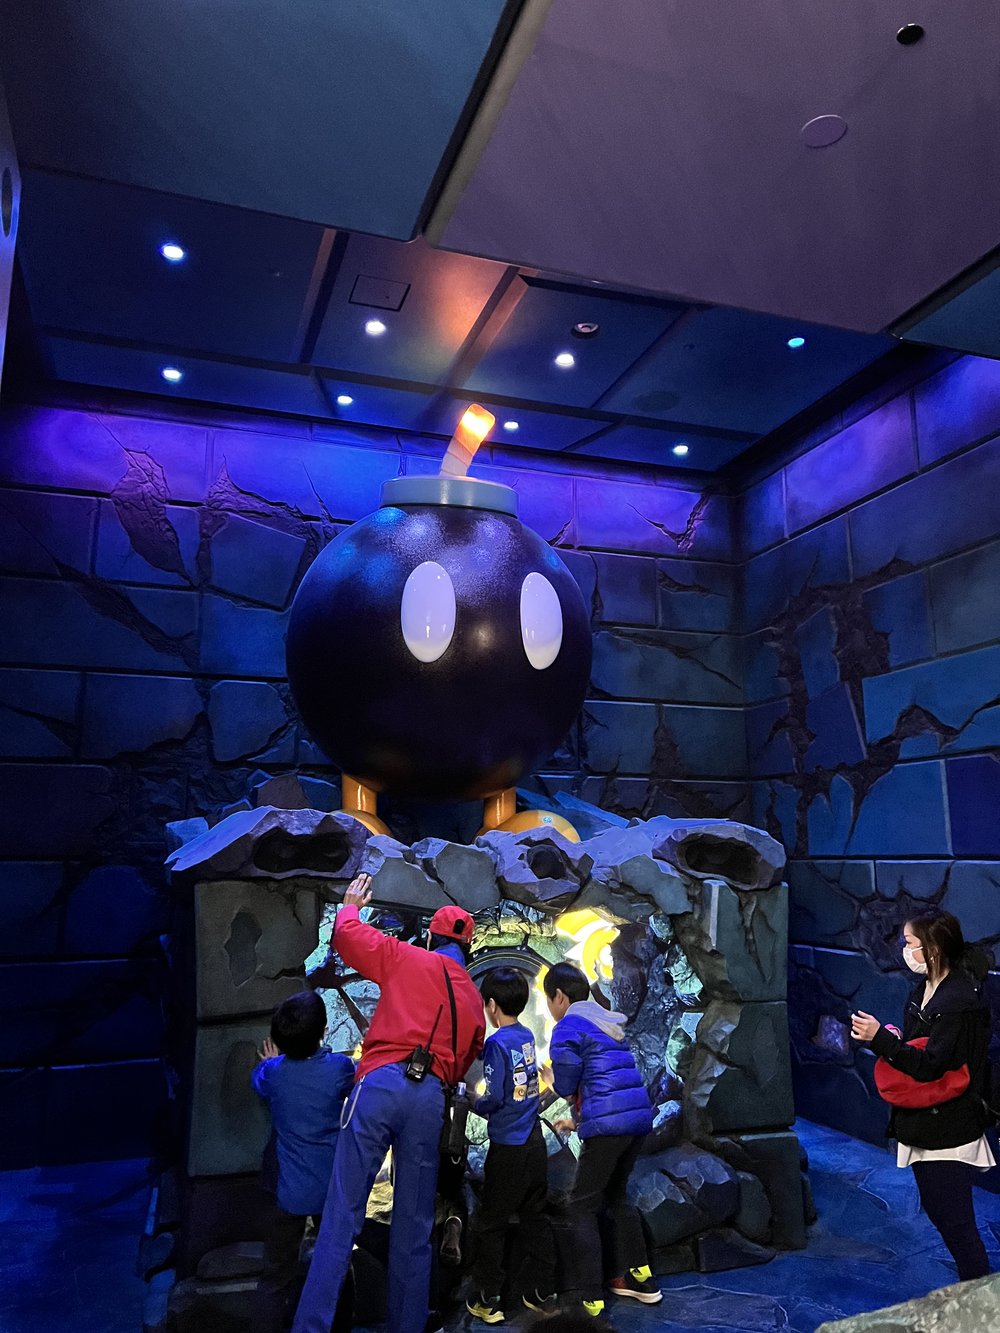  Bob-omb in a dark blue room 